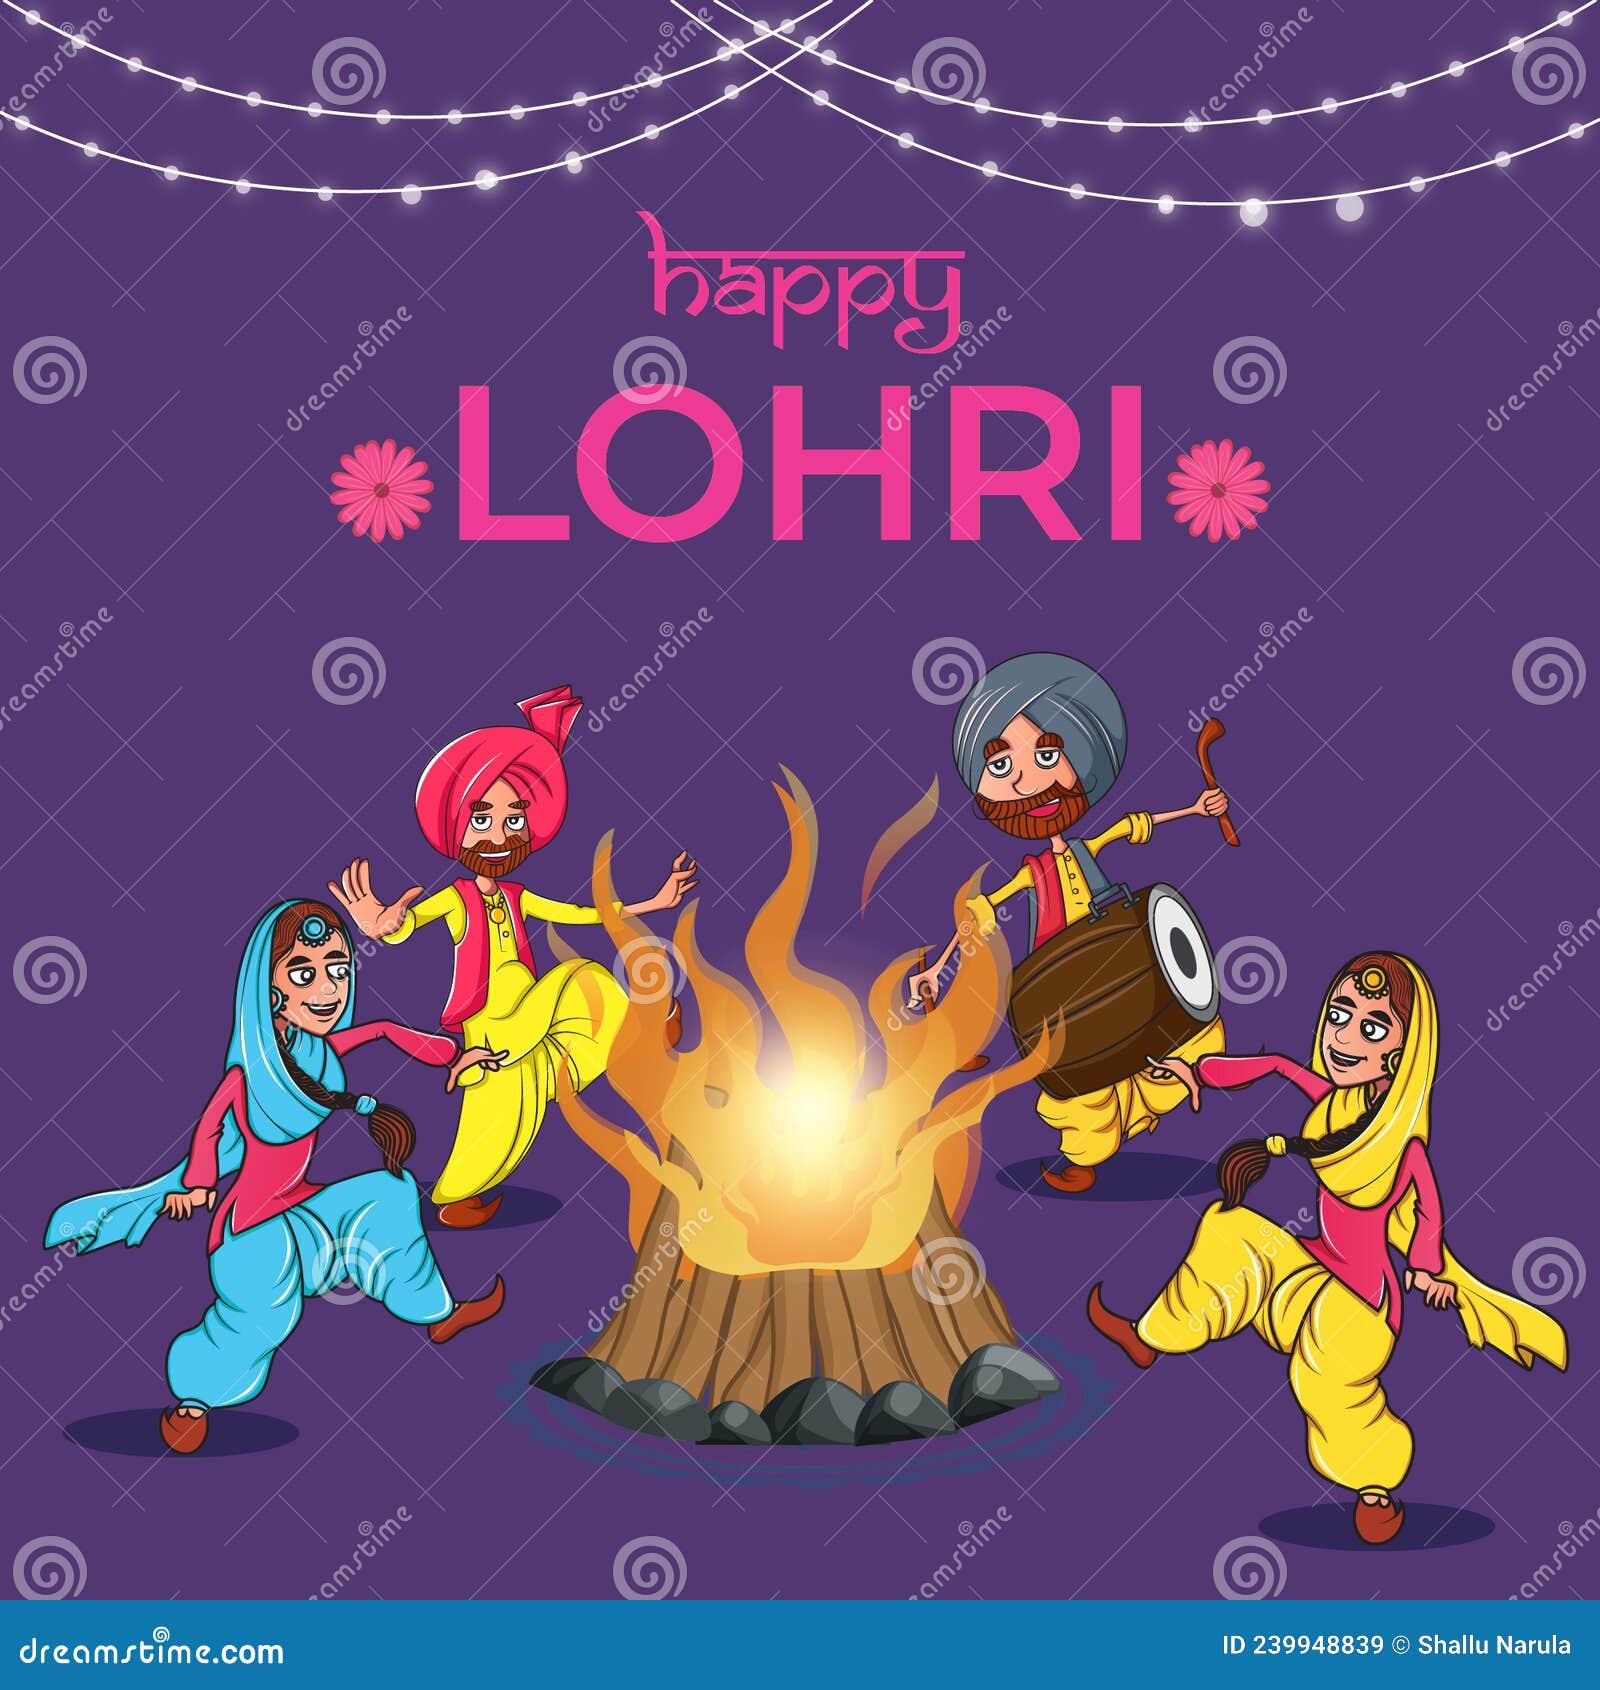 Banner Design of Happy Lohri Festival Stock Vector - Illustration of party,  enjoy: 239948839